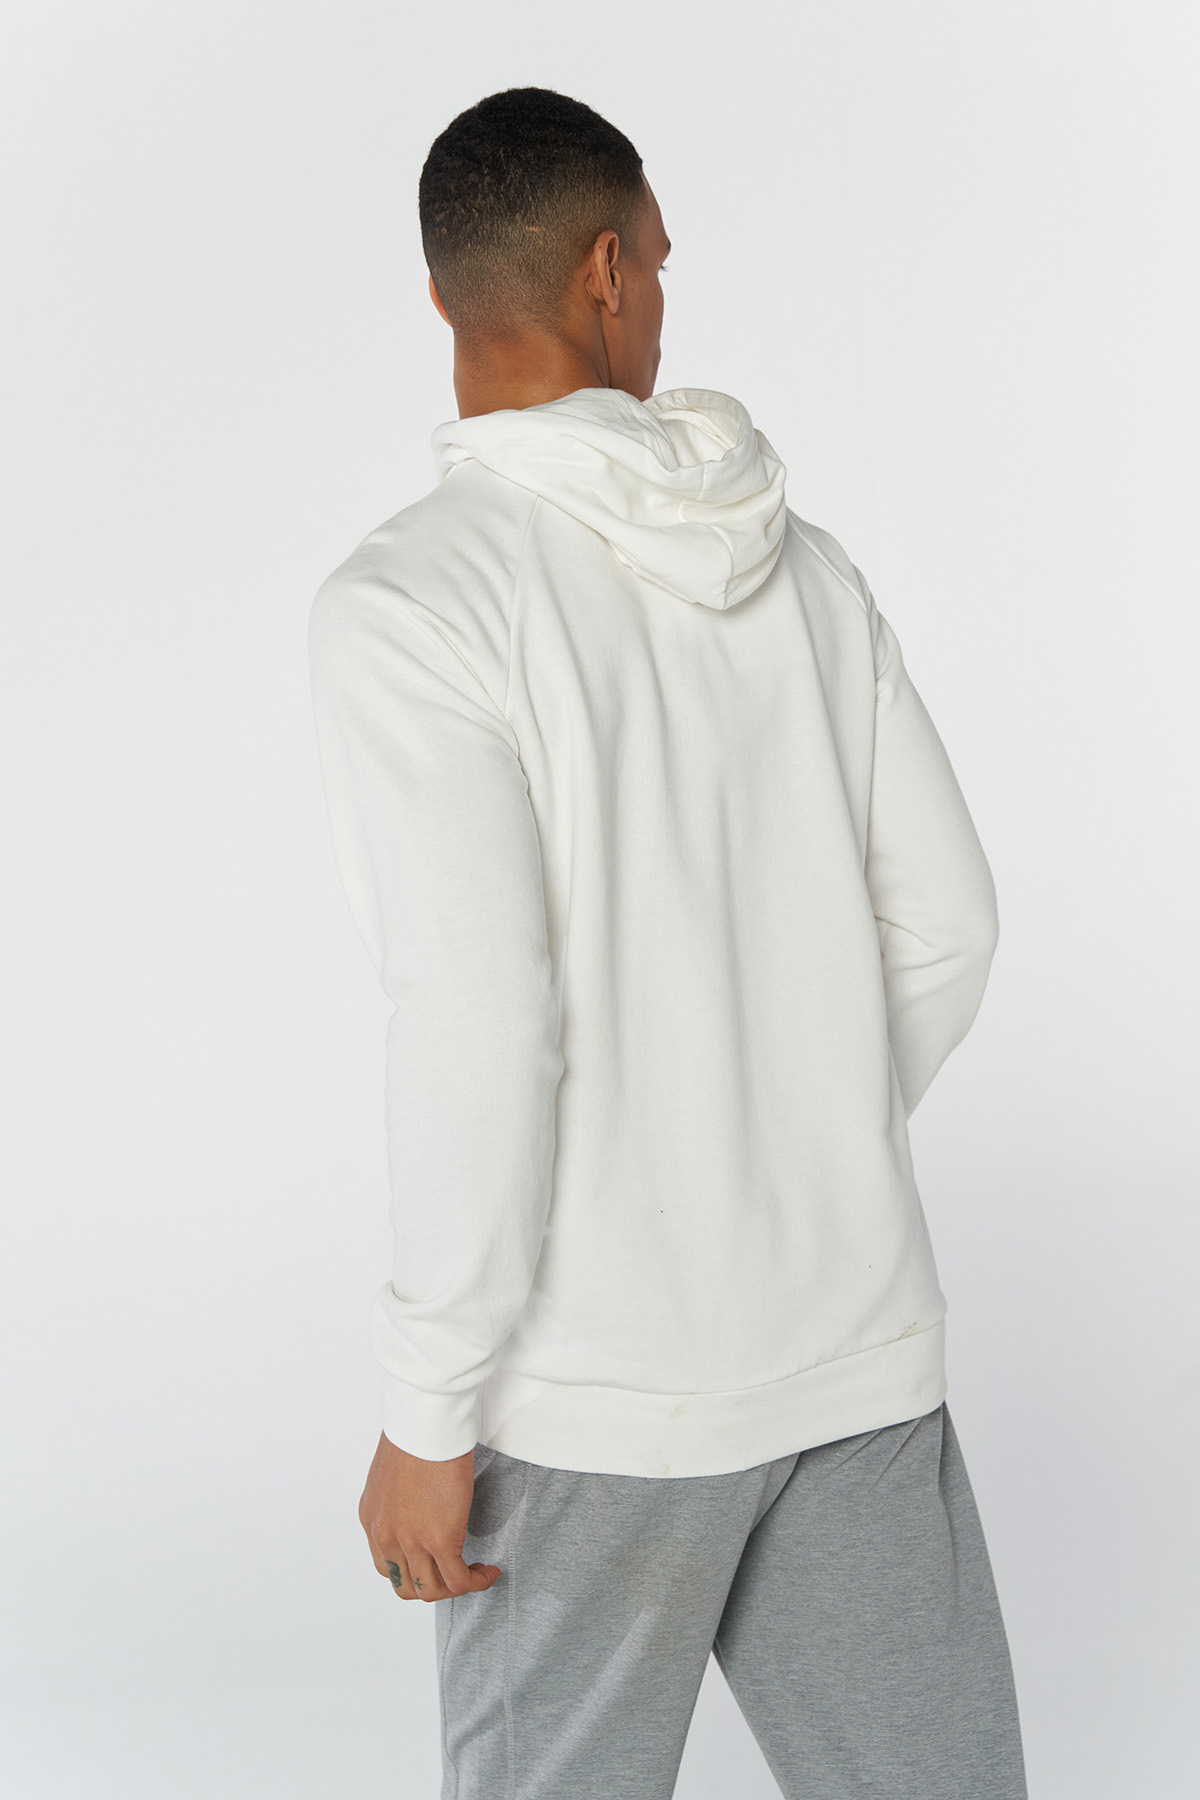 Hoodies & Sweatshirts – PB Teamwear